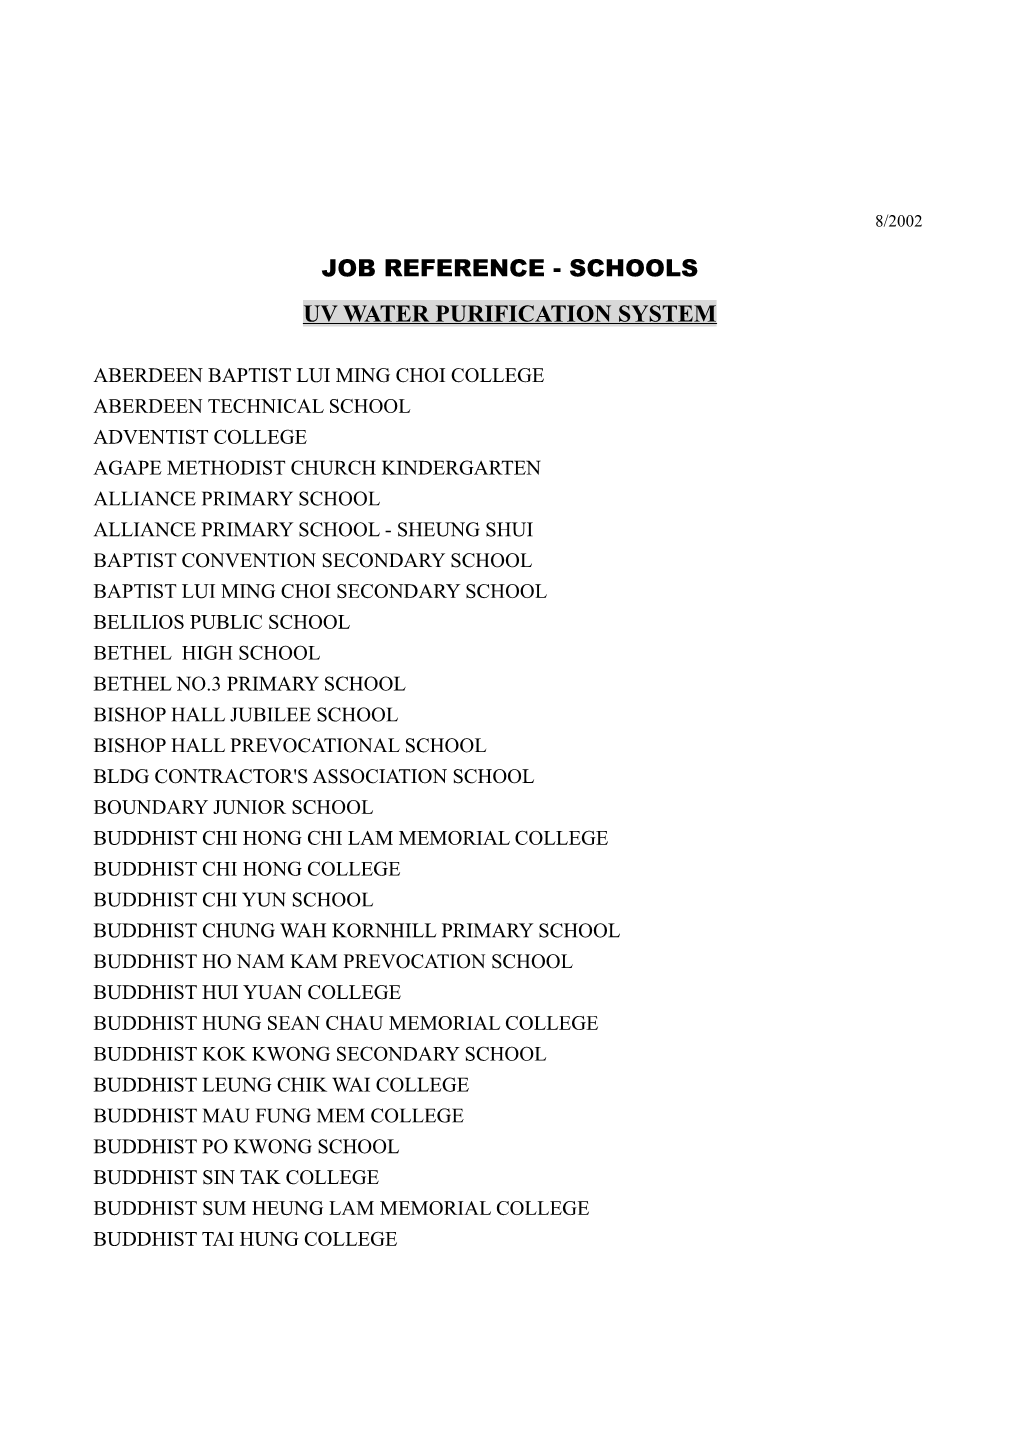 Job Reference - Schools